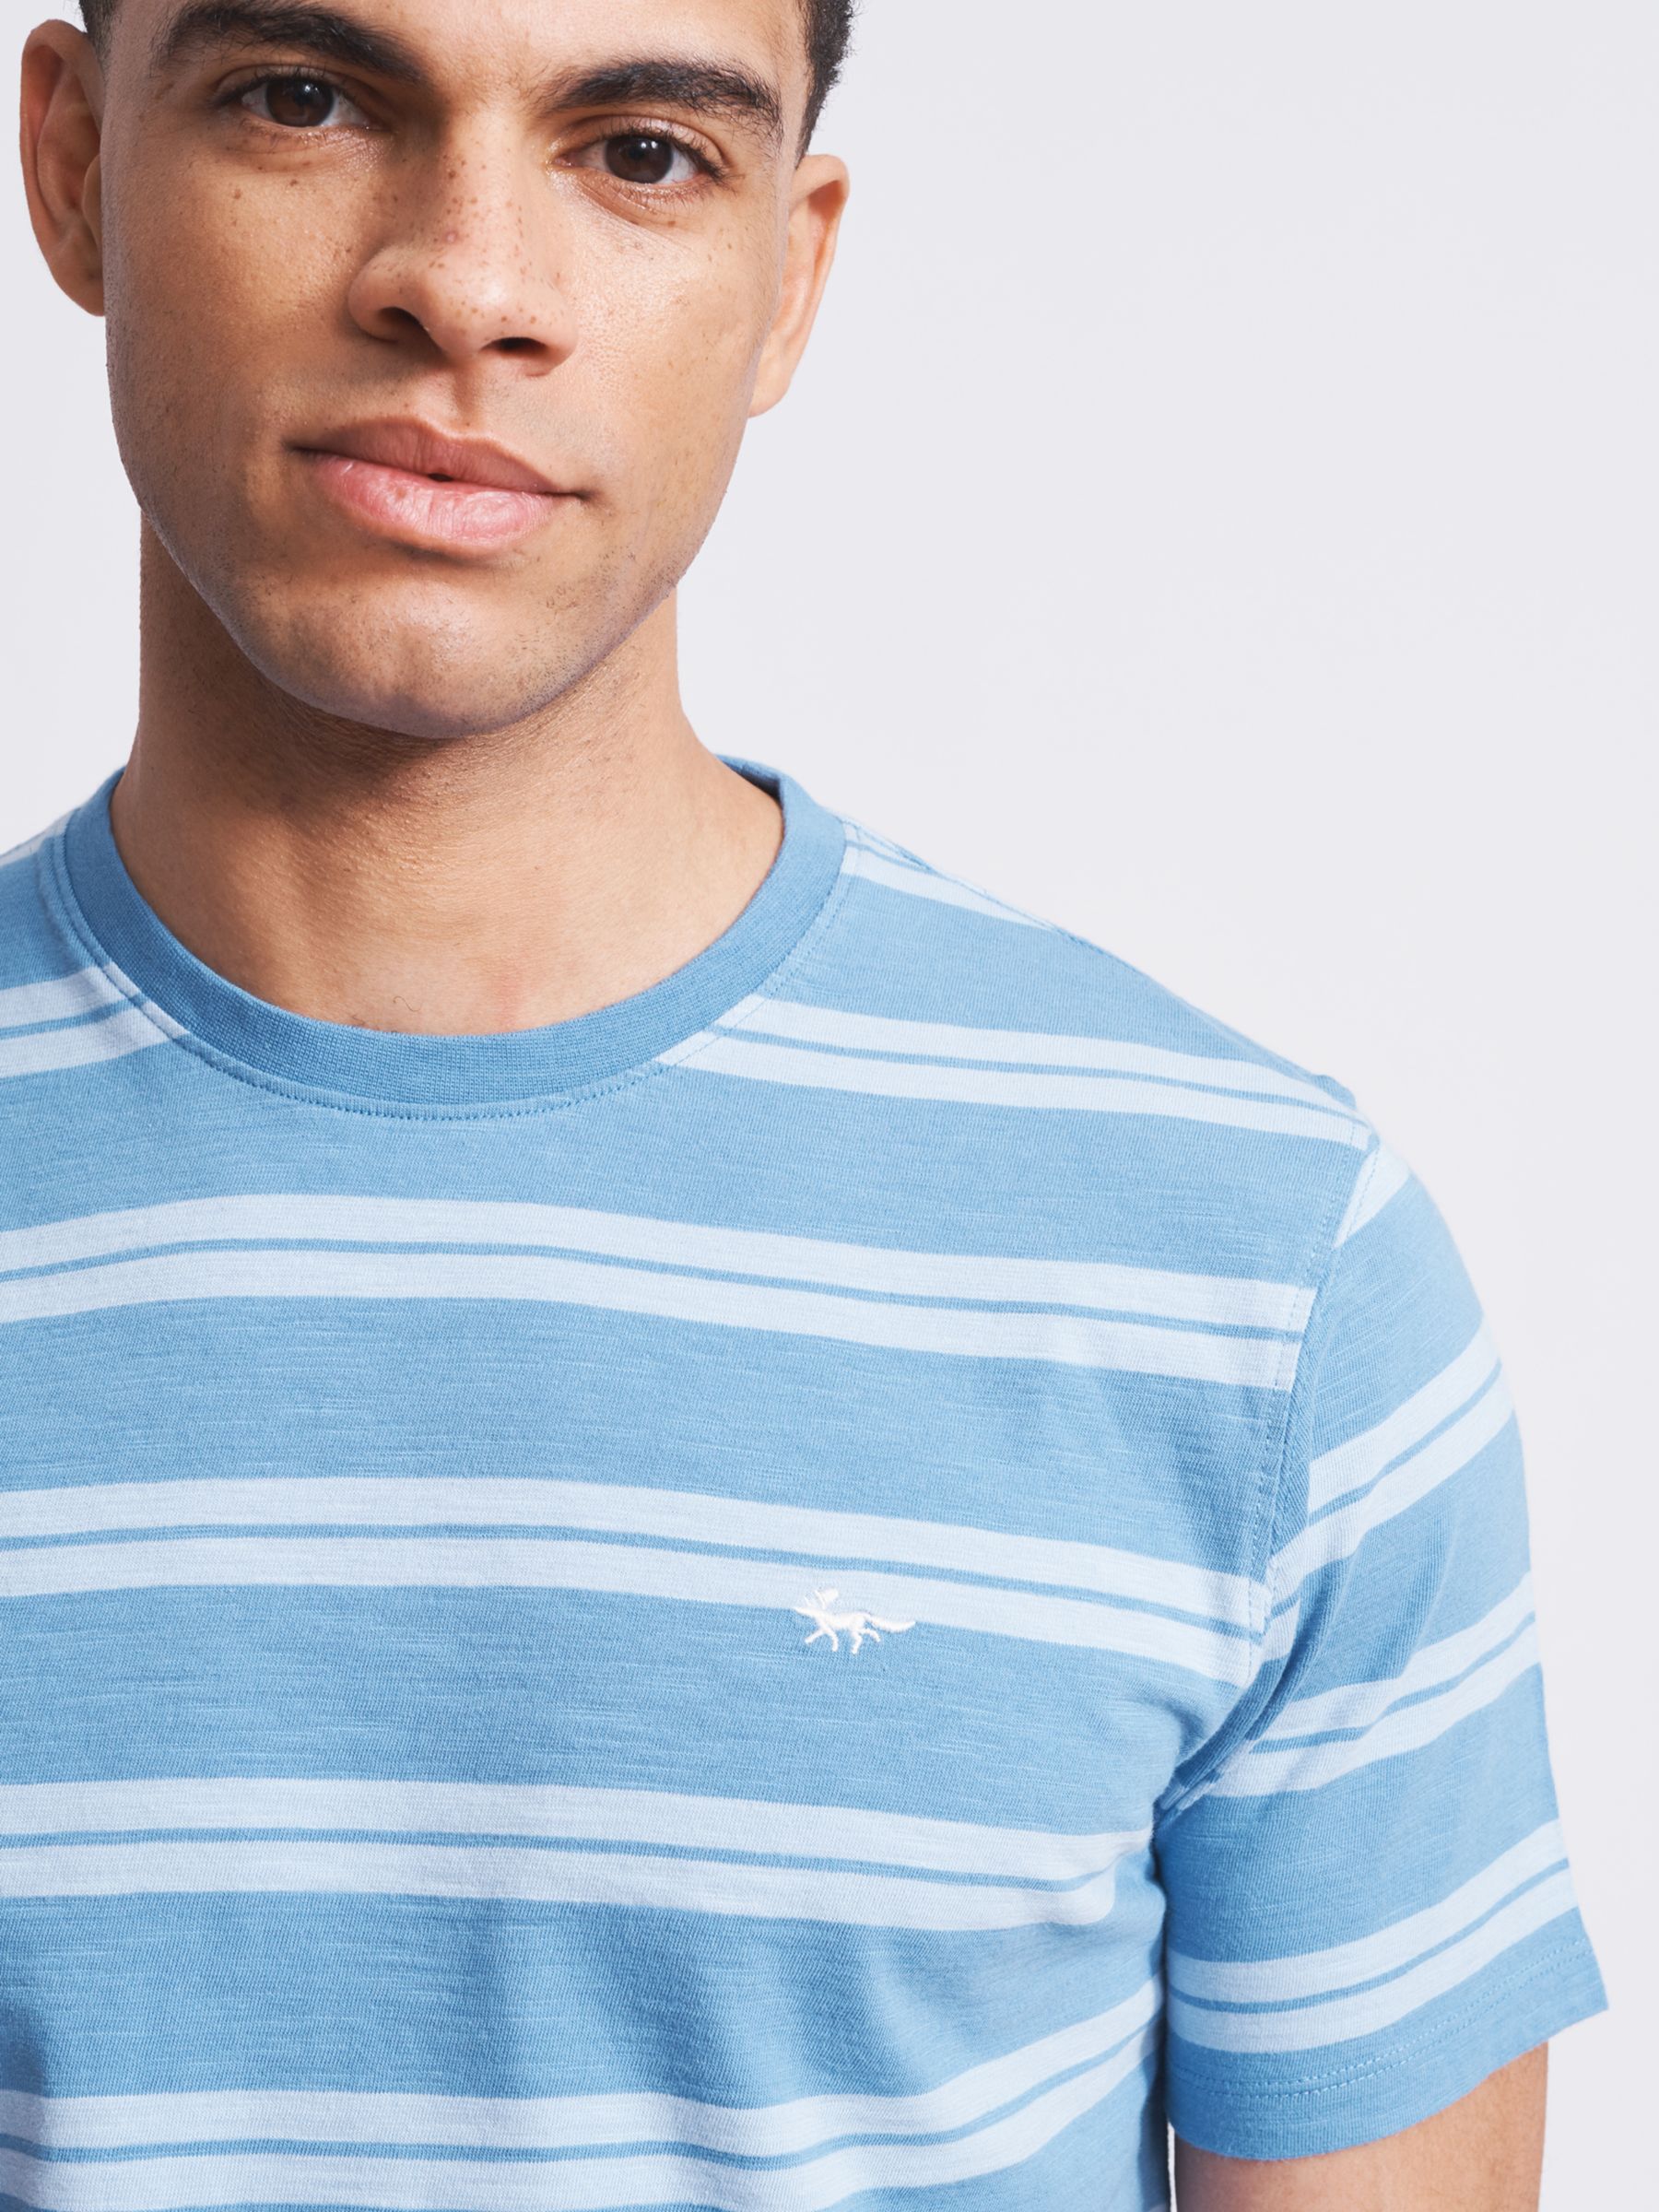 Aubin Berkeley Slub Cotton T-Shirt, Blue Stripe, S